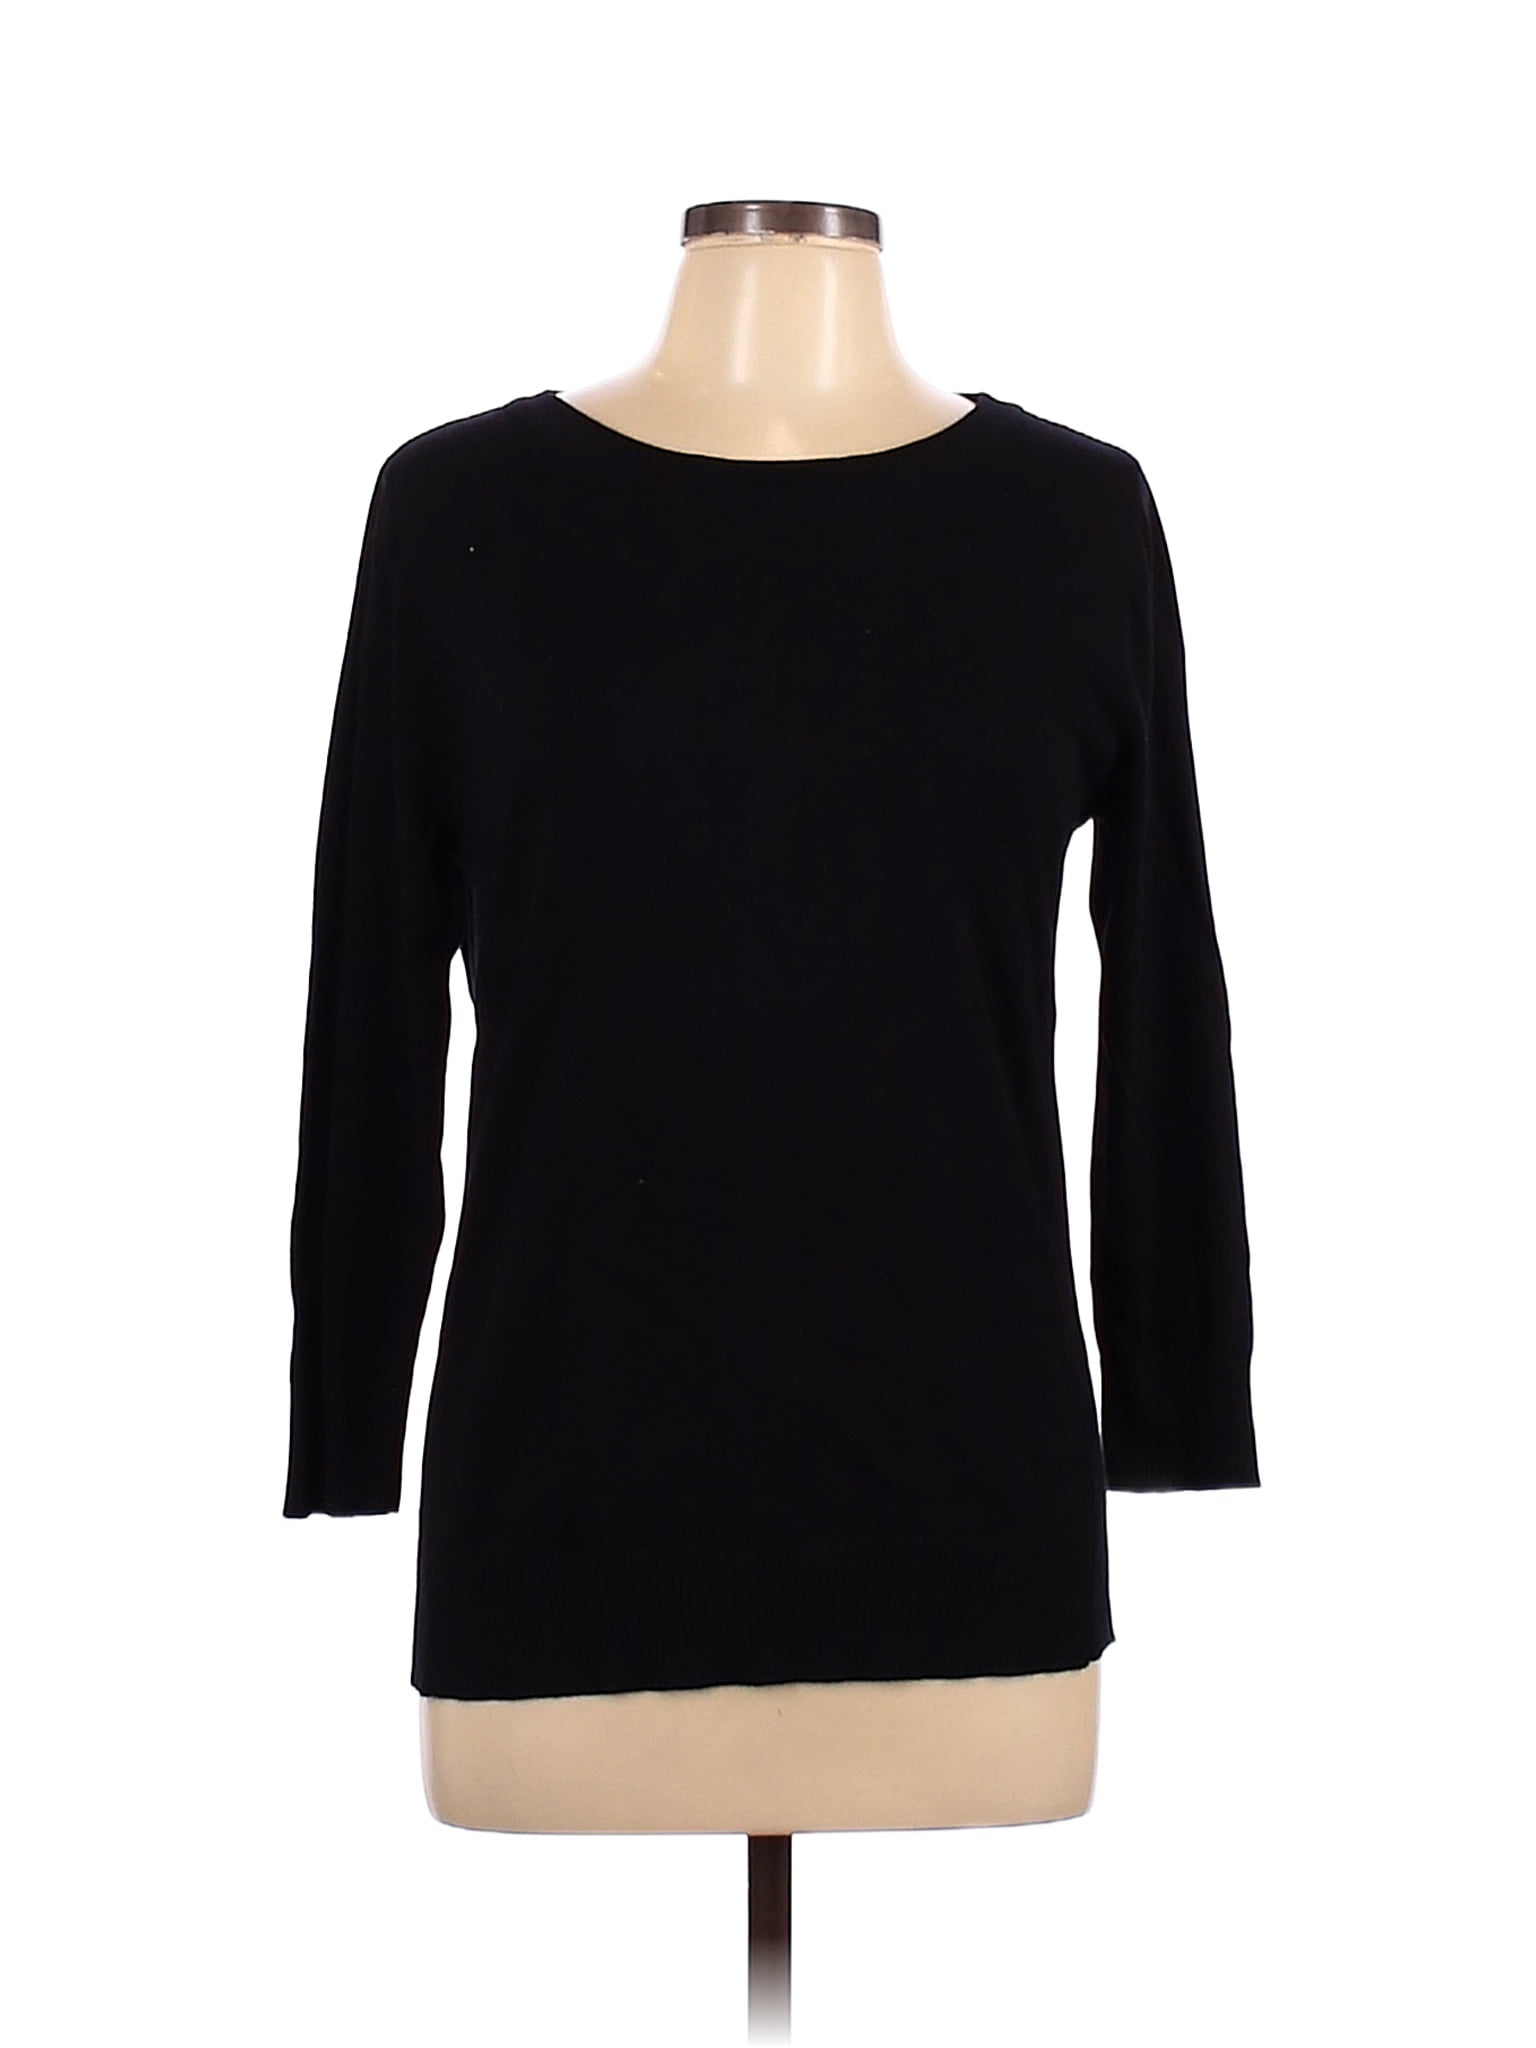 Joseph A. Black Pullover Sweater Size L - 63% off | thredUP